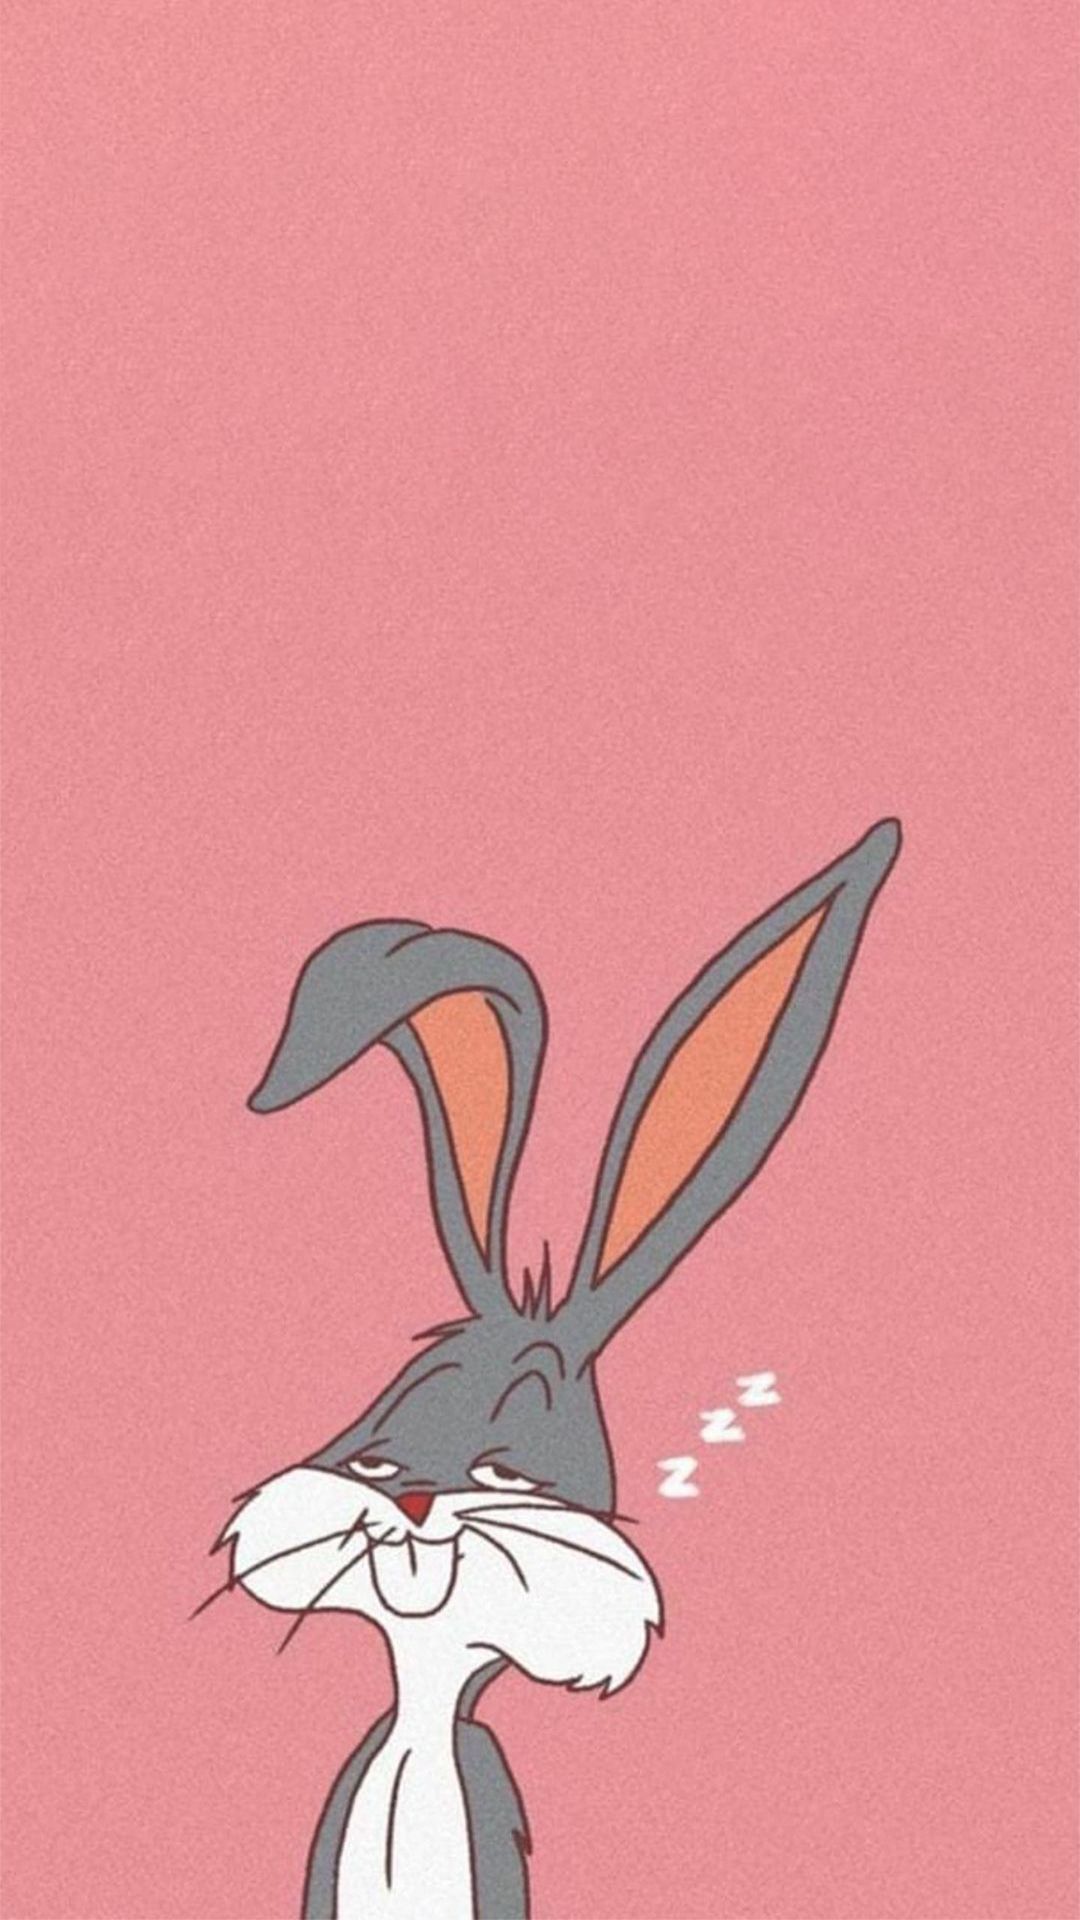 A cartoon rabbit with big ears is sleeping on pink background - Bugs Bunny, Looney Tunes